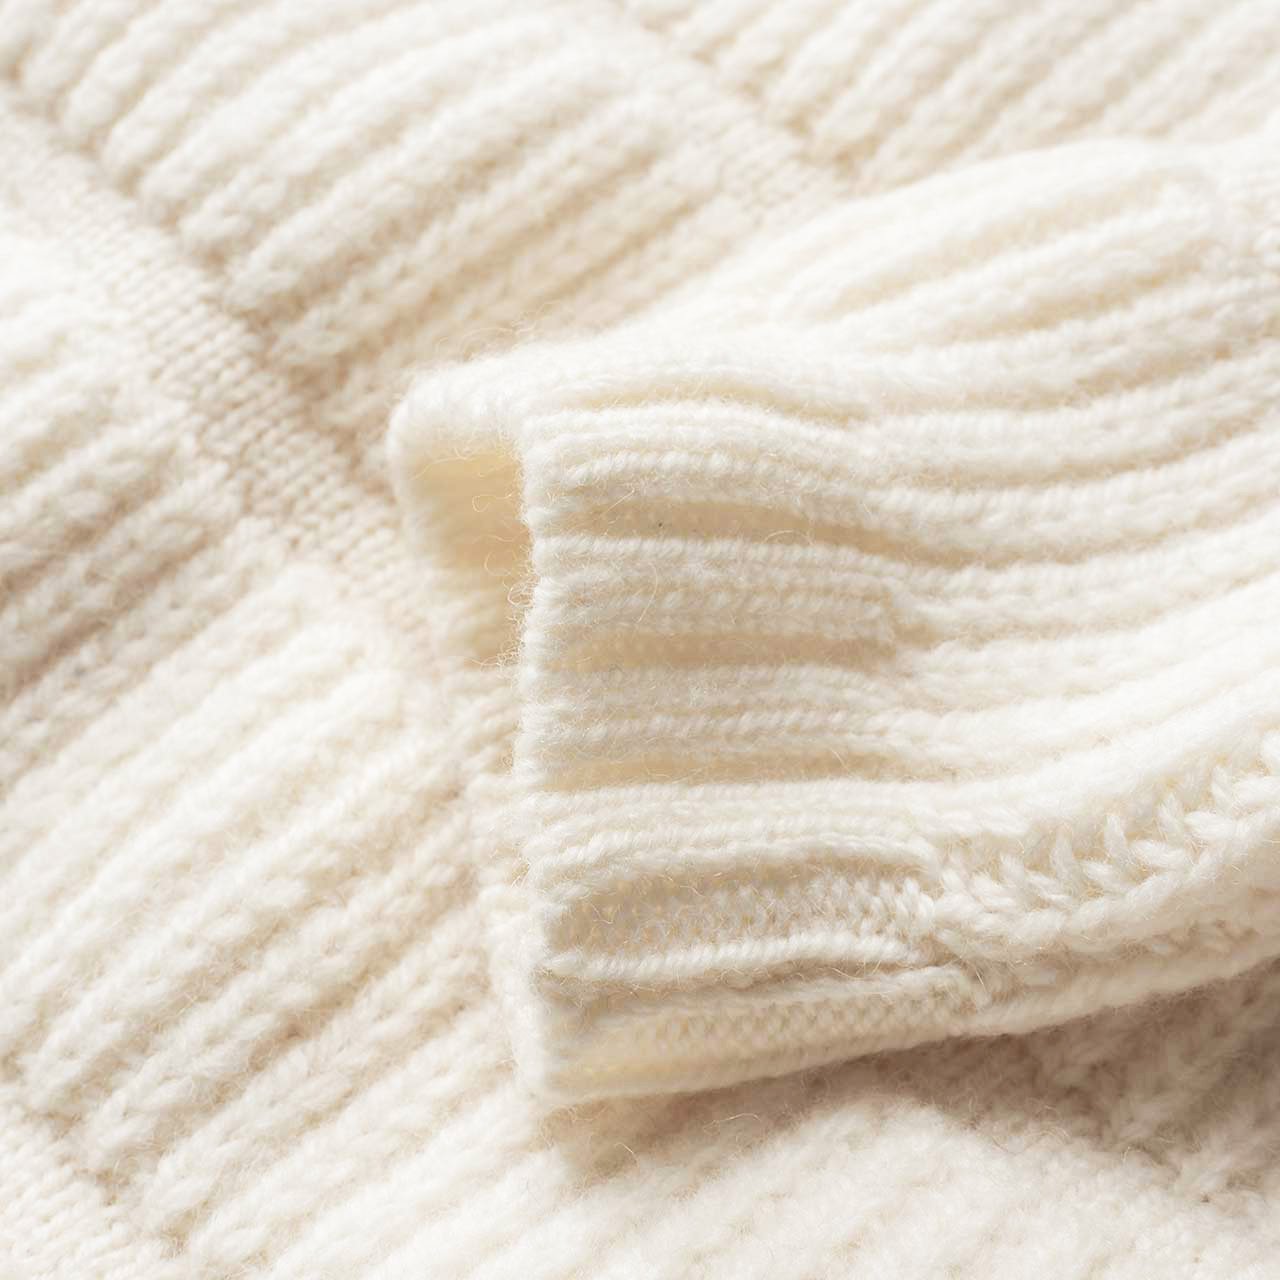 henrik vibskov chunky tubes knit (whisper white) - aw20-m702 - a.plus - Image - 6